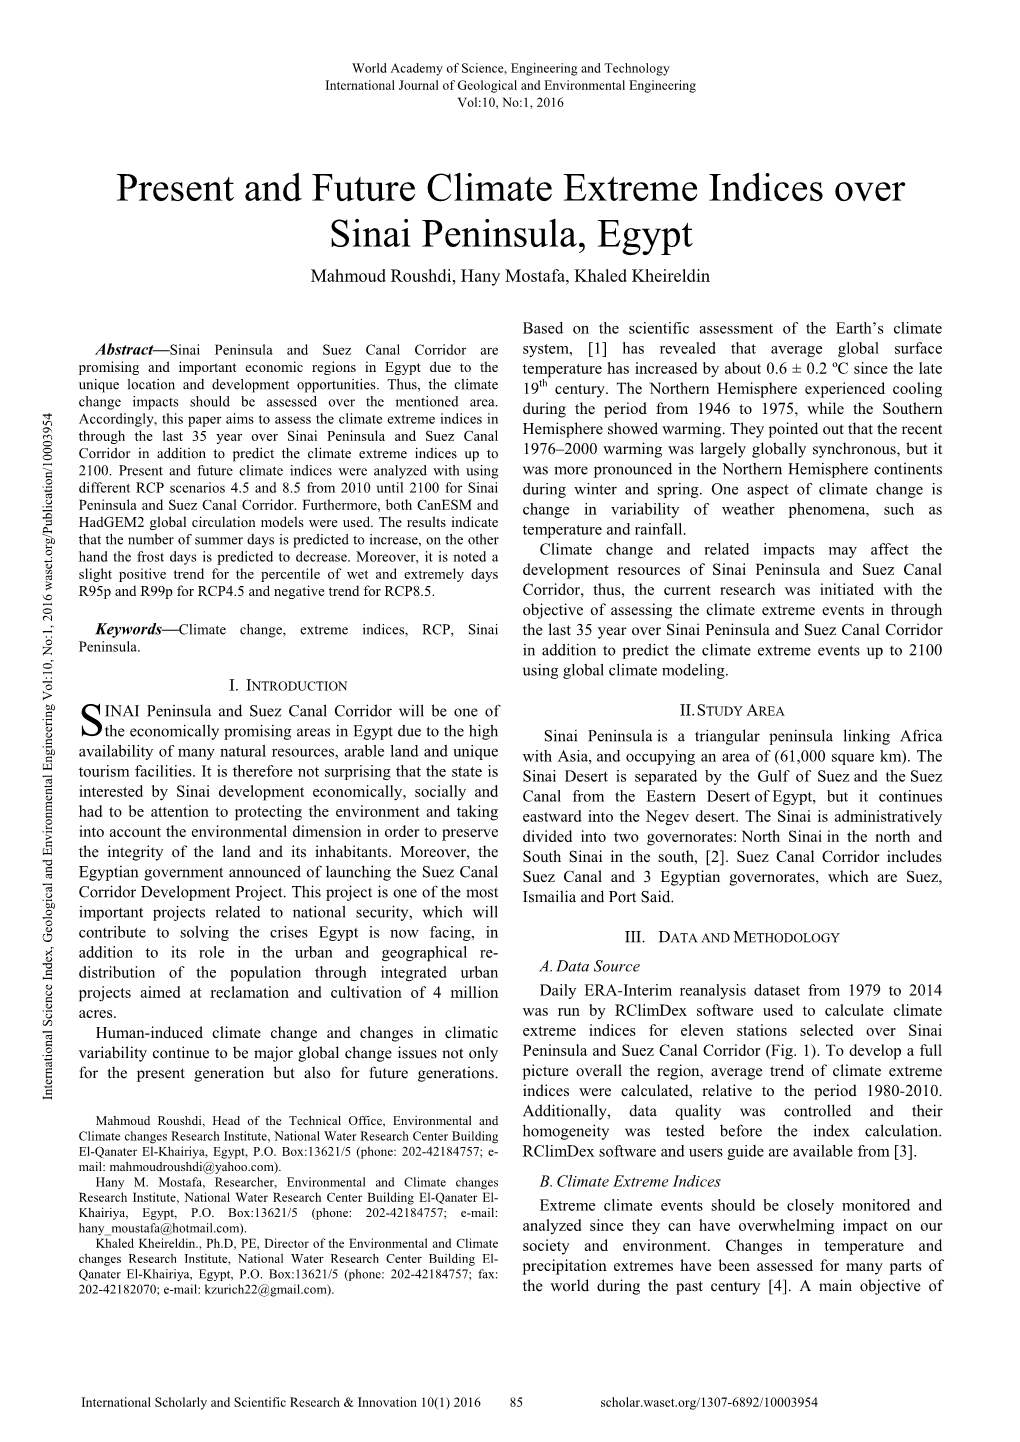 Present and Future Climate Extreme Indices Over Sinai Peninsula, Egypt Mahmoud Roushdi, Hany Mostafa, Khaled Kheireldin